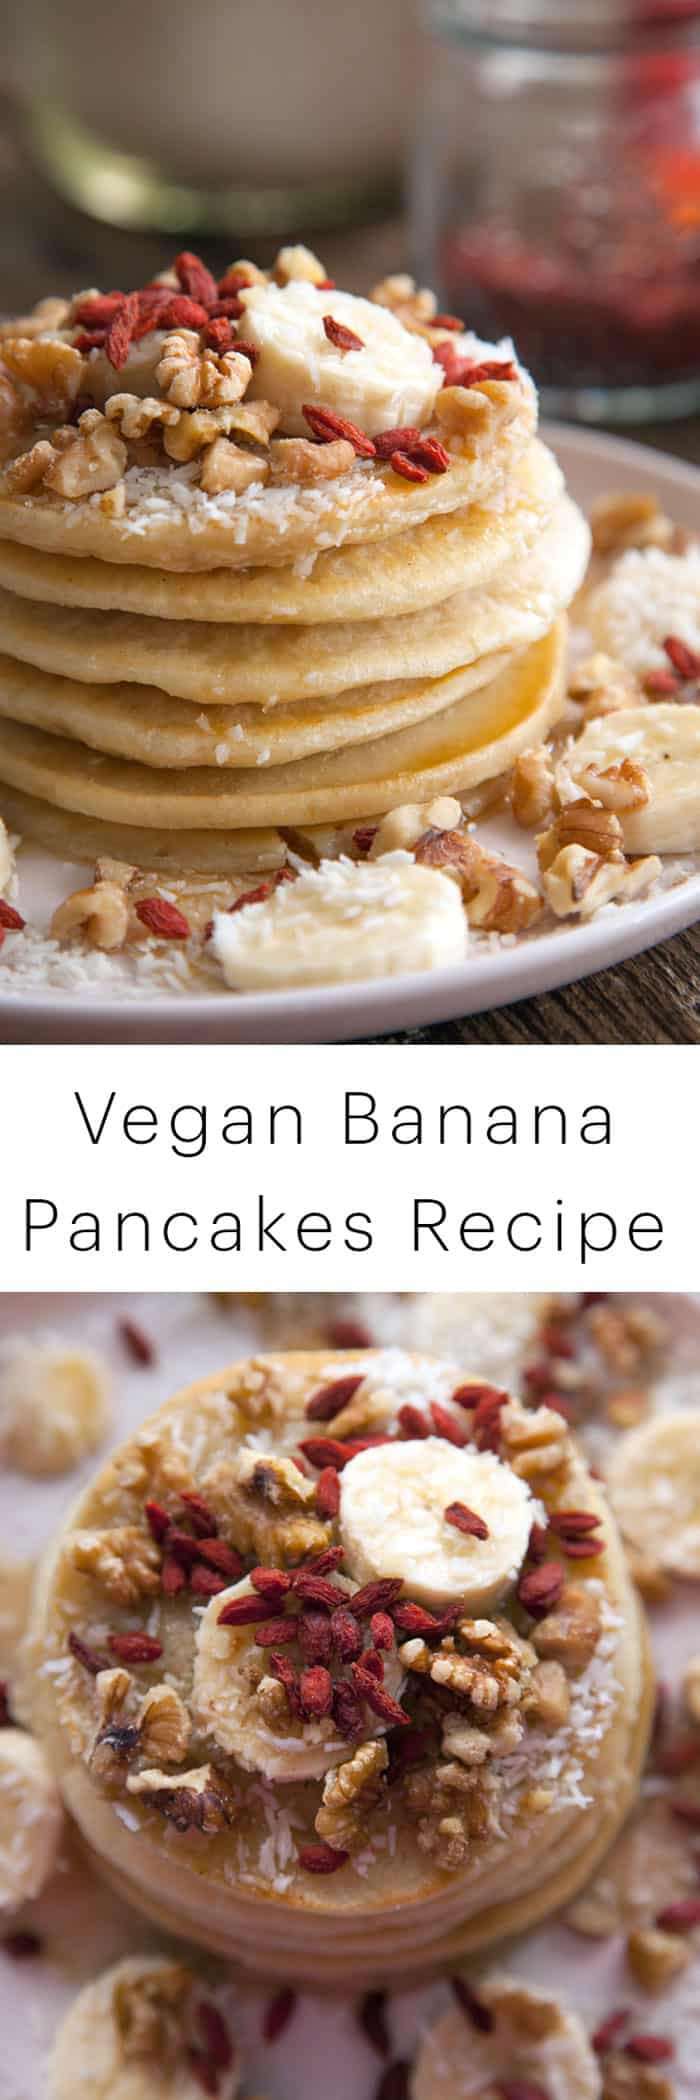 Vegetarian Banana Pancakes Recipe
 Banana Pancakes Vegan Recipe